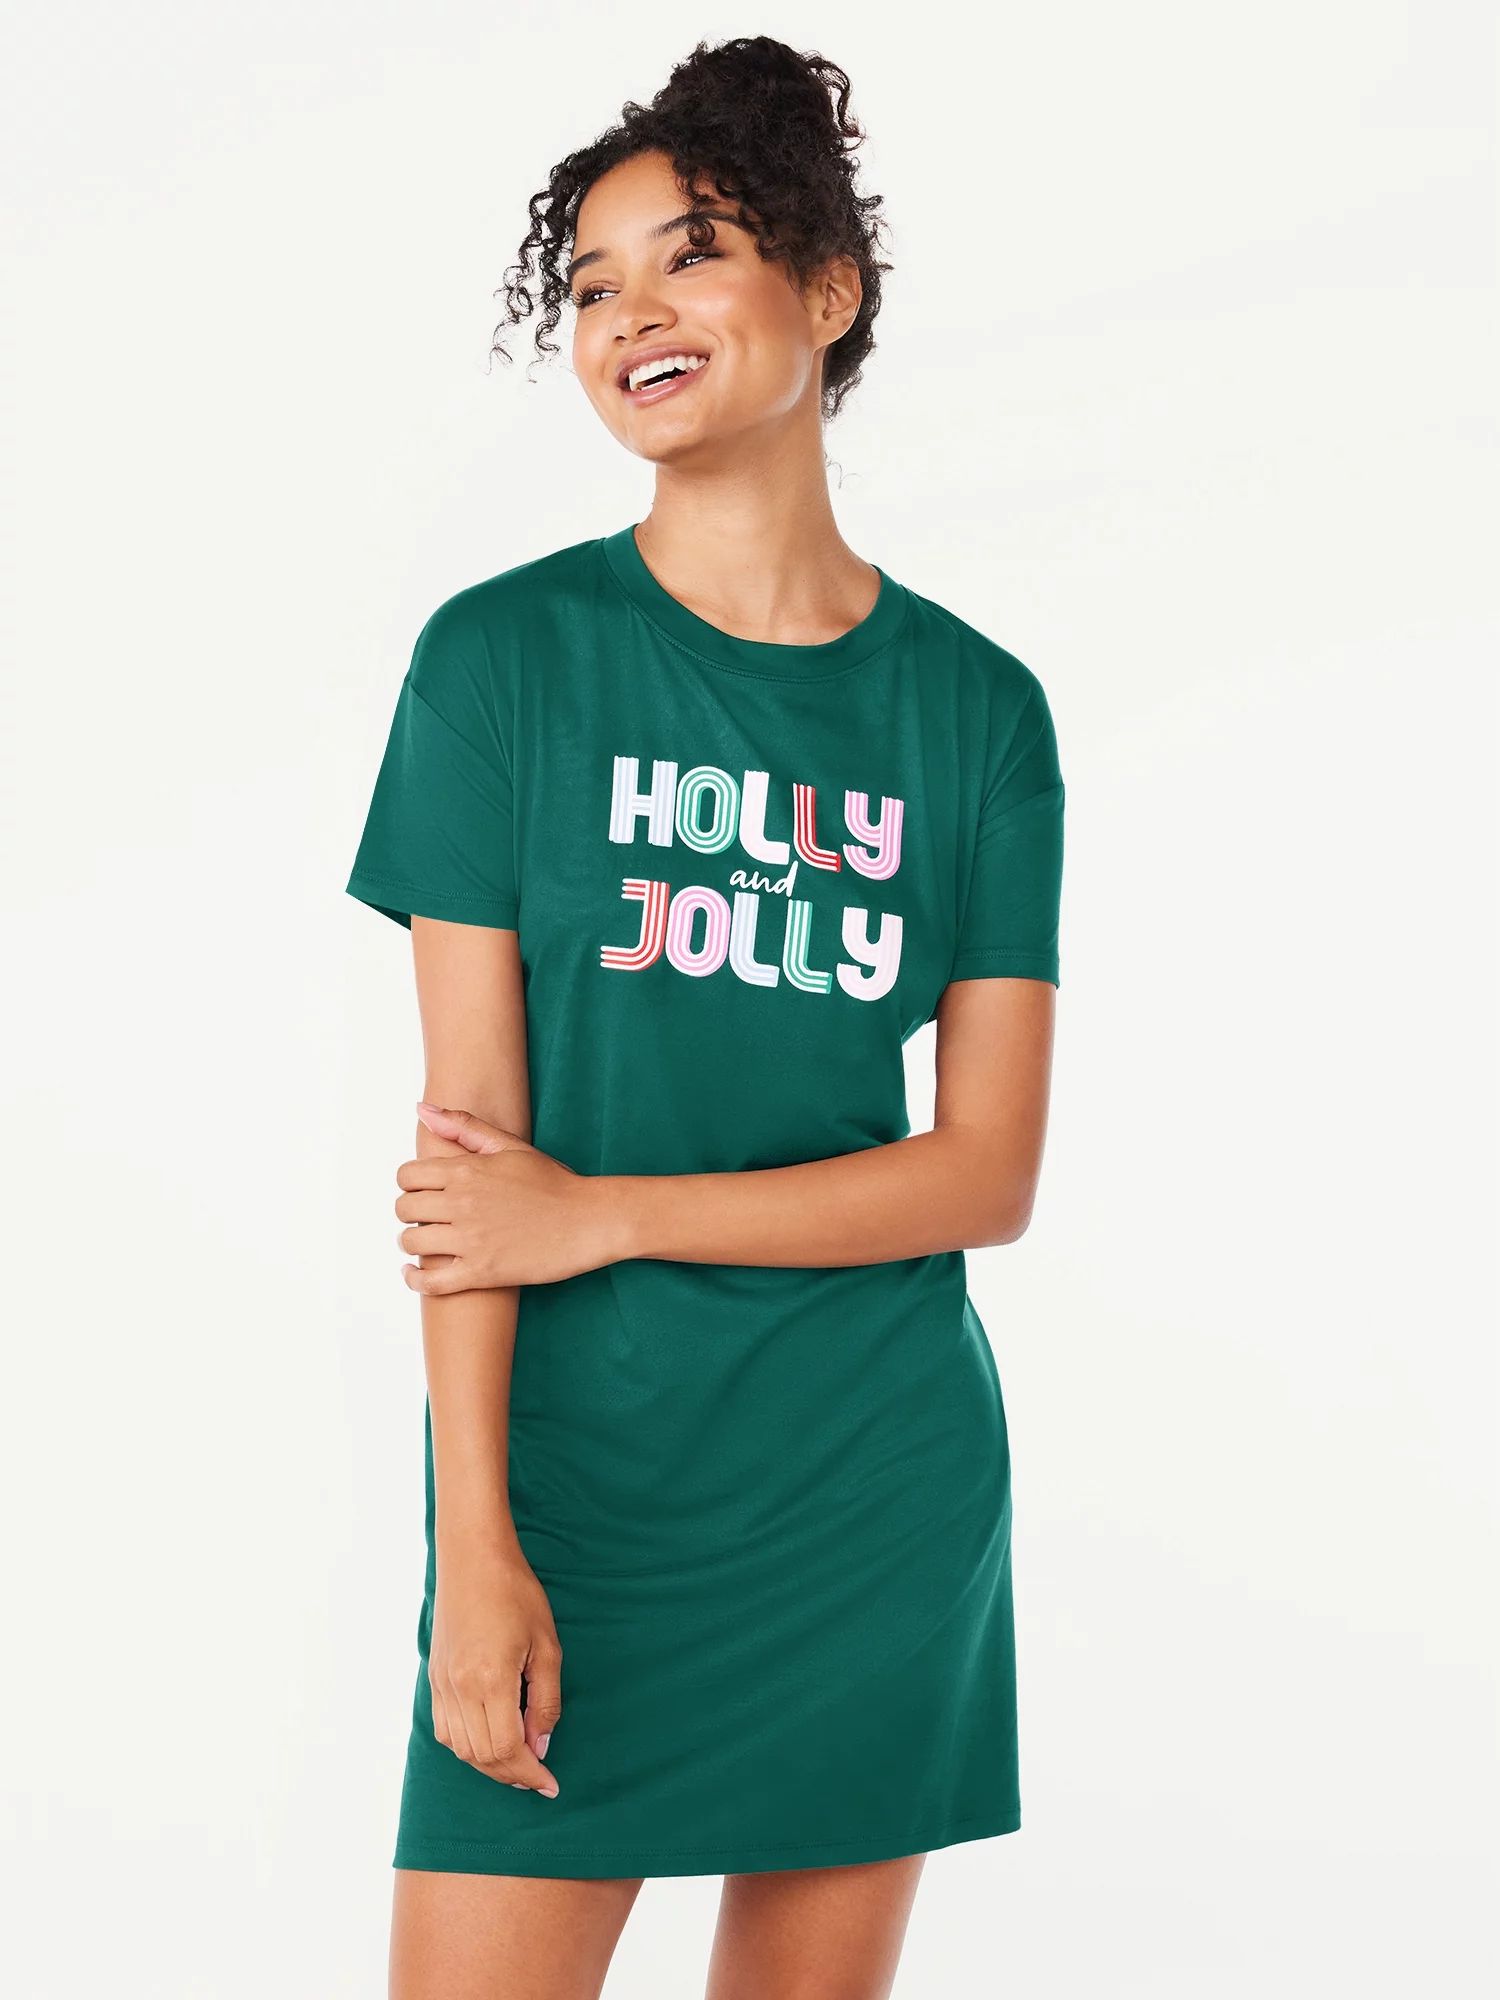 Joyspun Women’s Short Sleeve Sleep Shirt, Sizes S to 3X | Walmart (US)